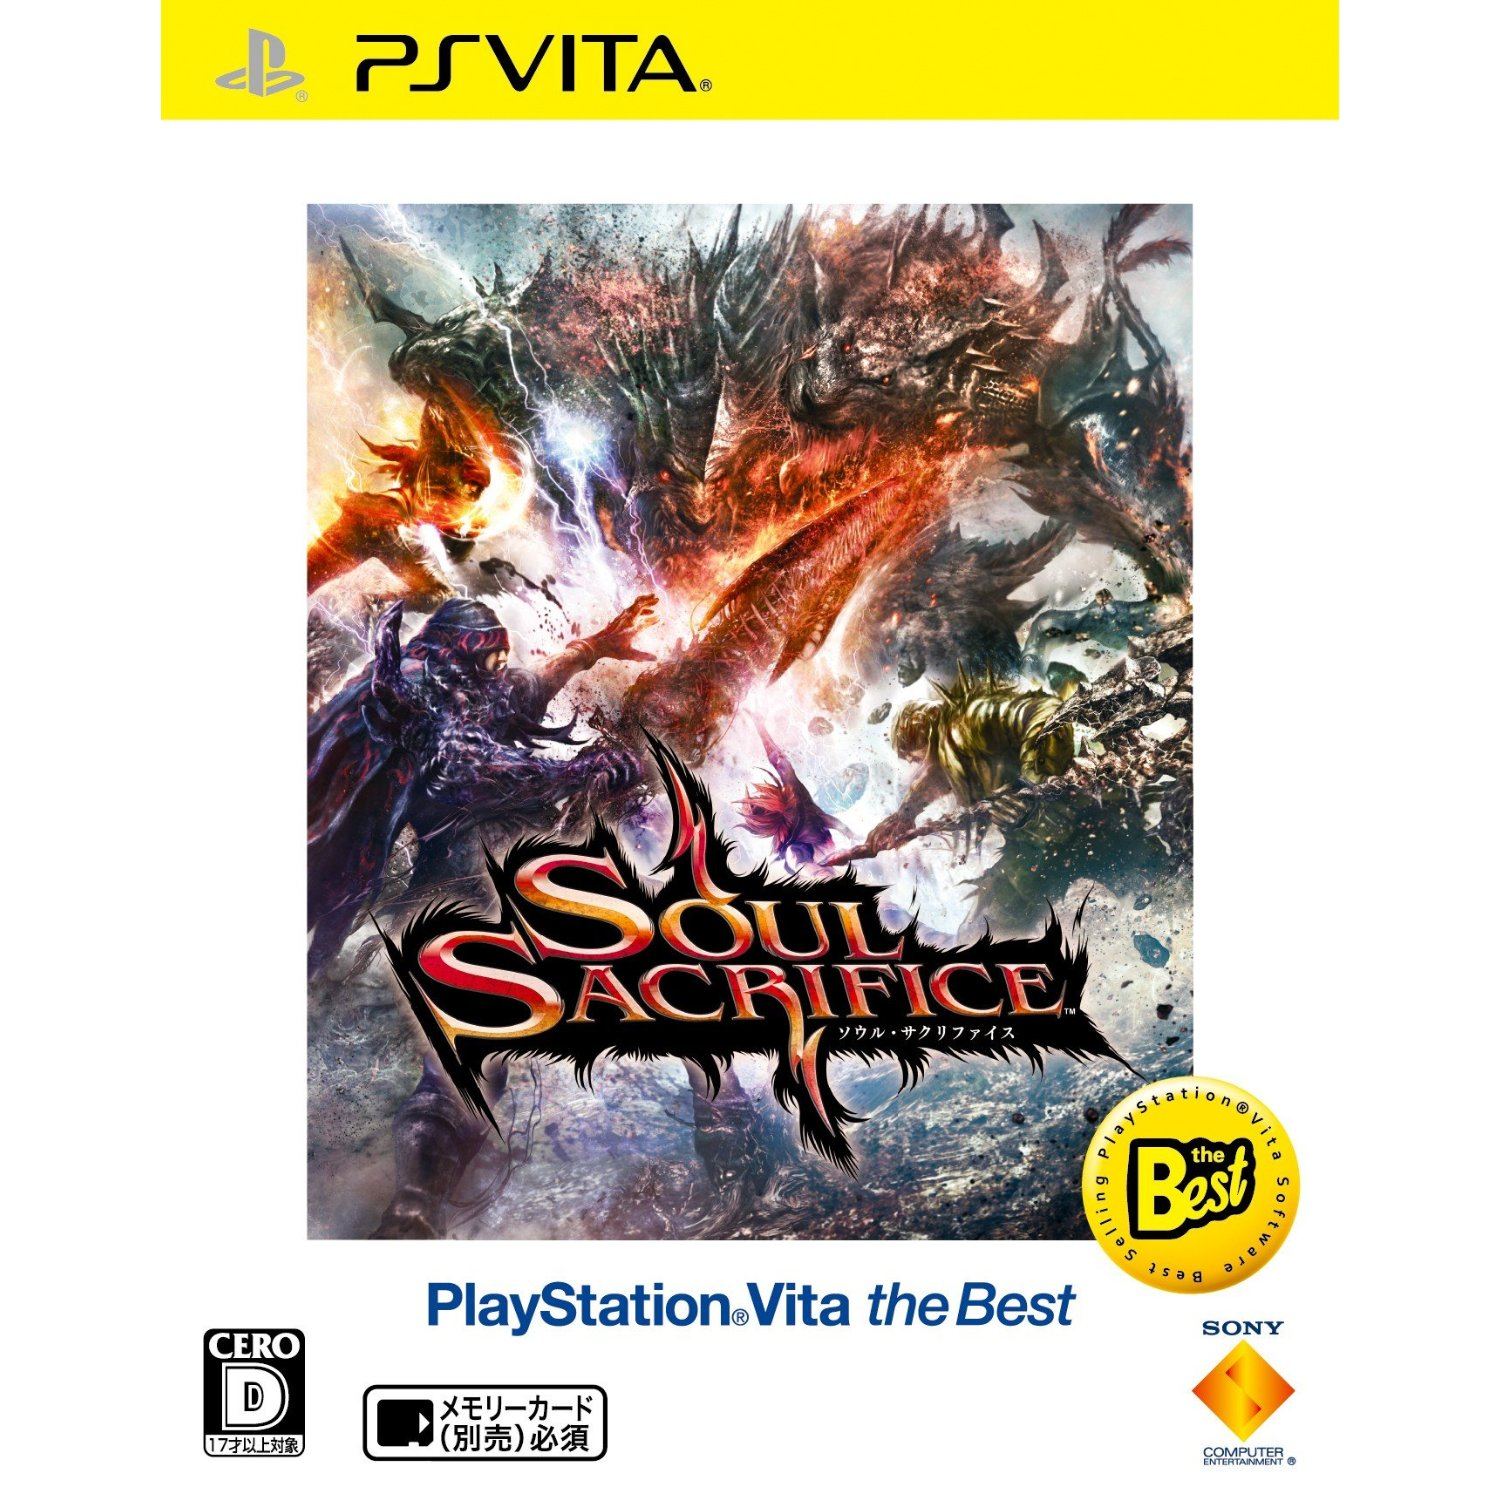 Soul Sacrifice Delta (Playstation Vita the Best) for PlayStation Vita